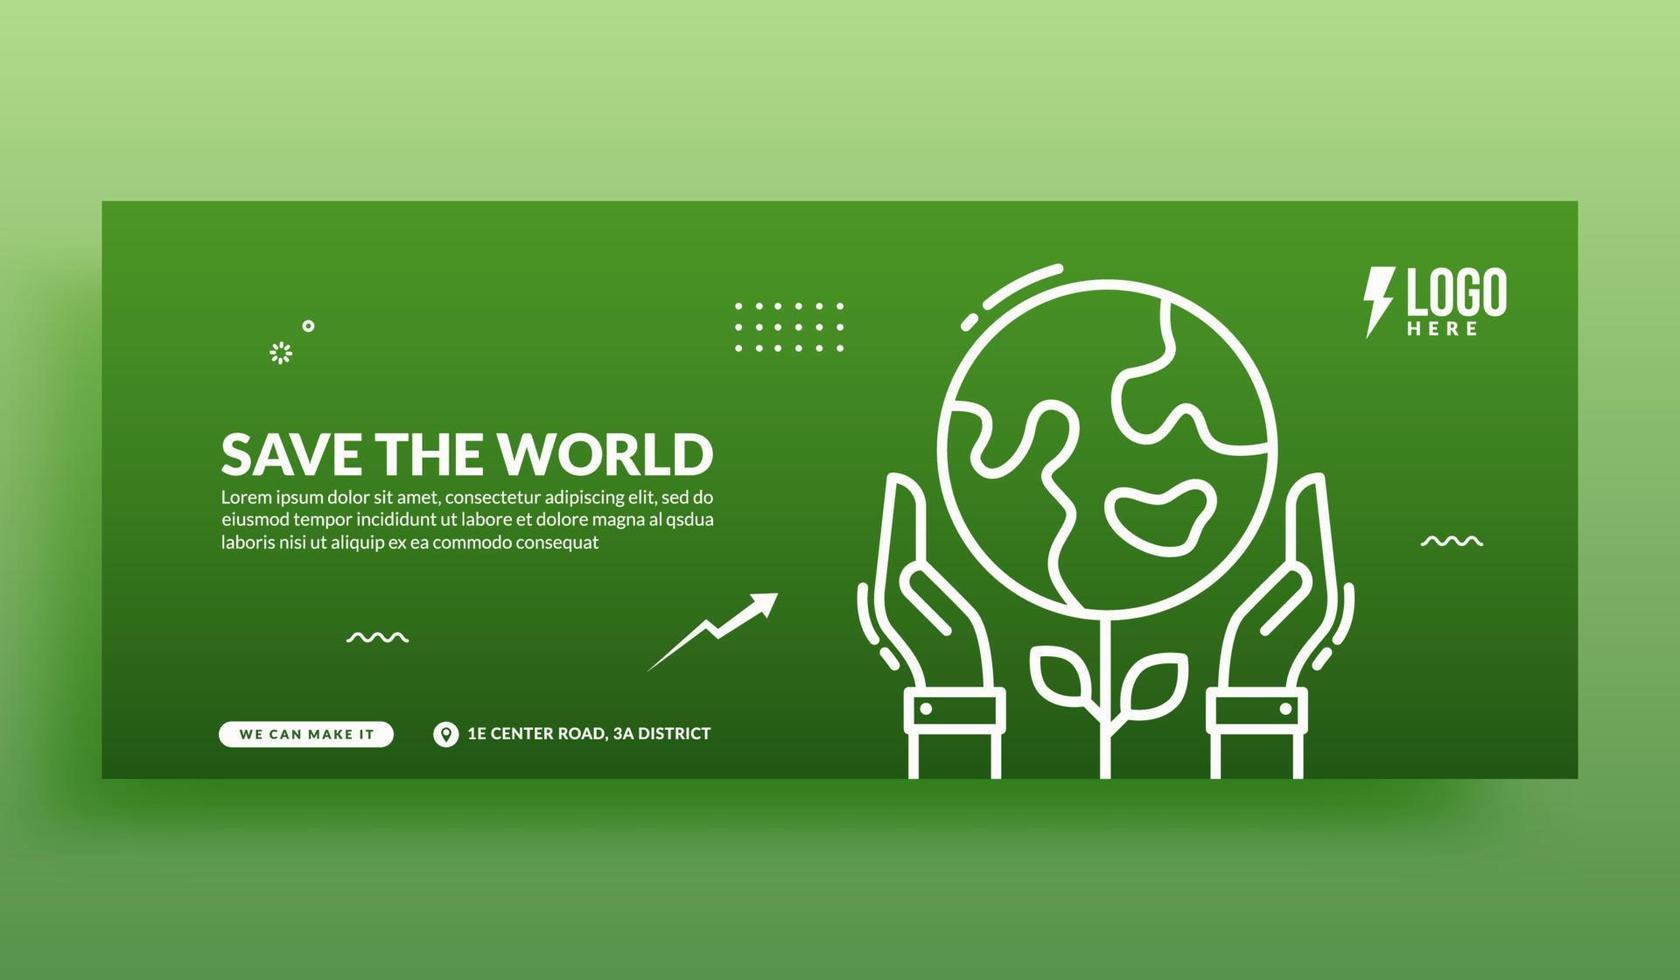 red de wereld sociale media omslagsjabloon voor spandoek, hand houd aarde plant op groene achtergrond vector